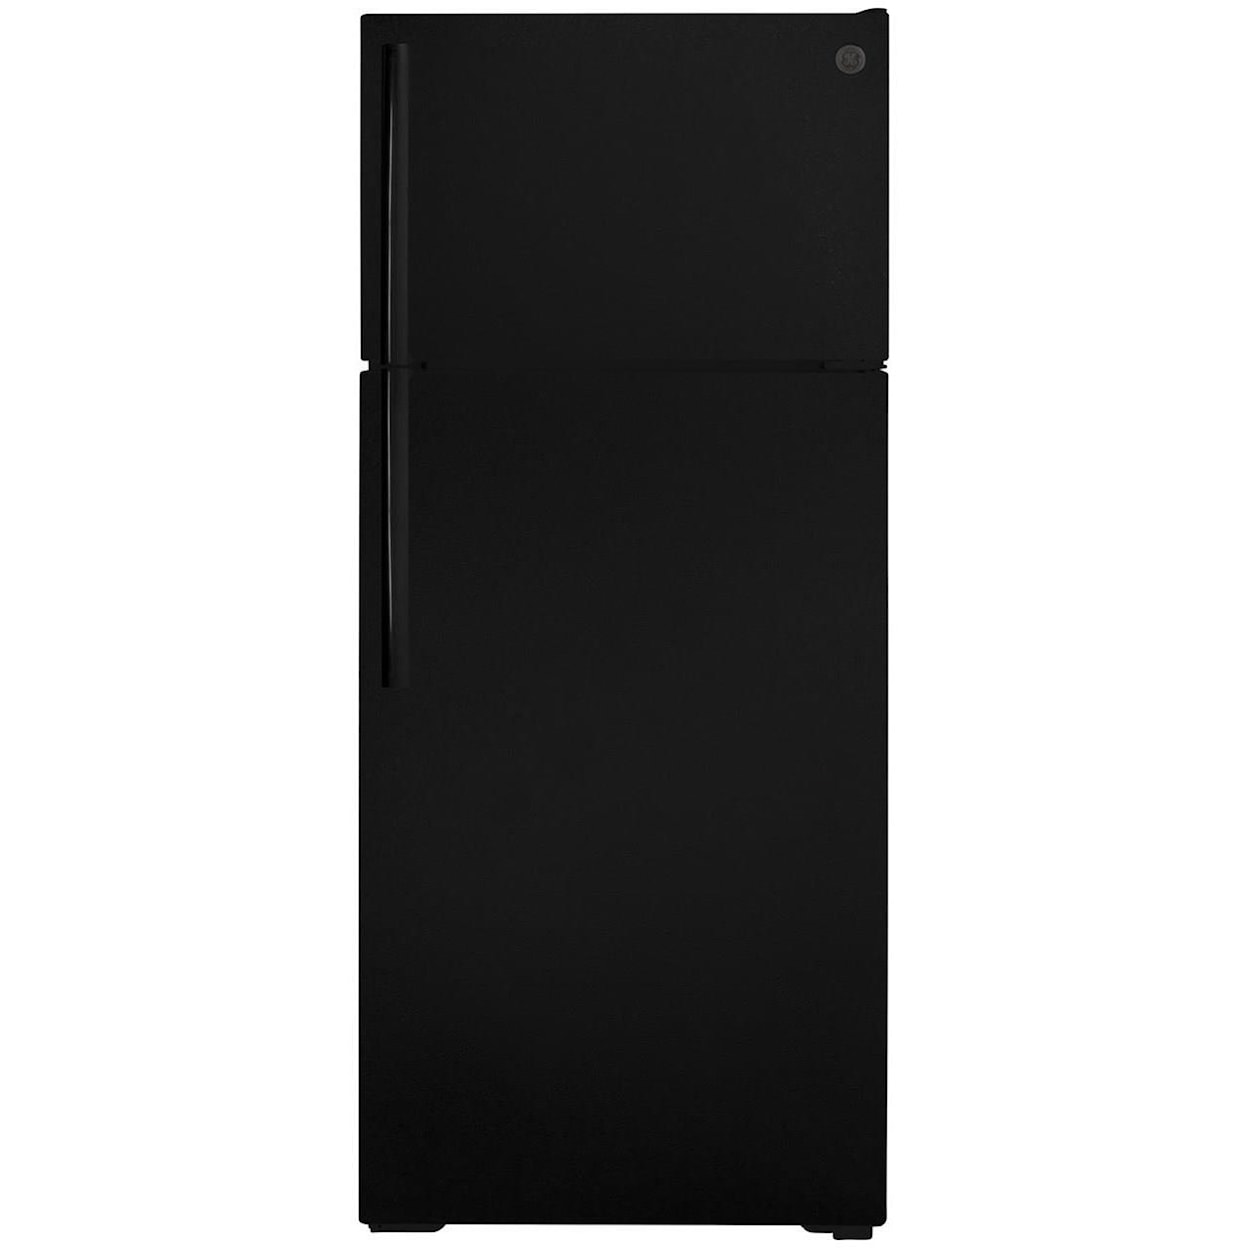 GE Appliances GE Top-Freezer Refrigerators GE® 17.5 Cu. Ft. Top-Freezer Refrigerator